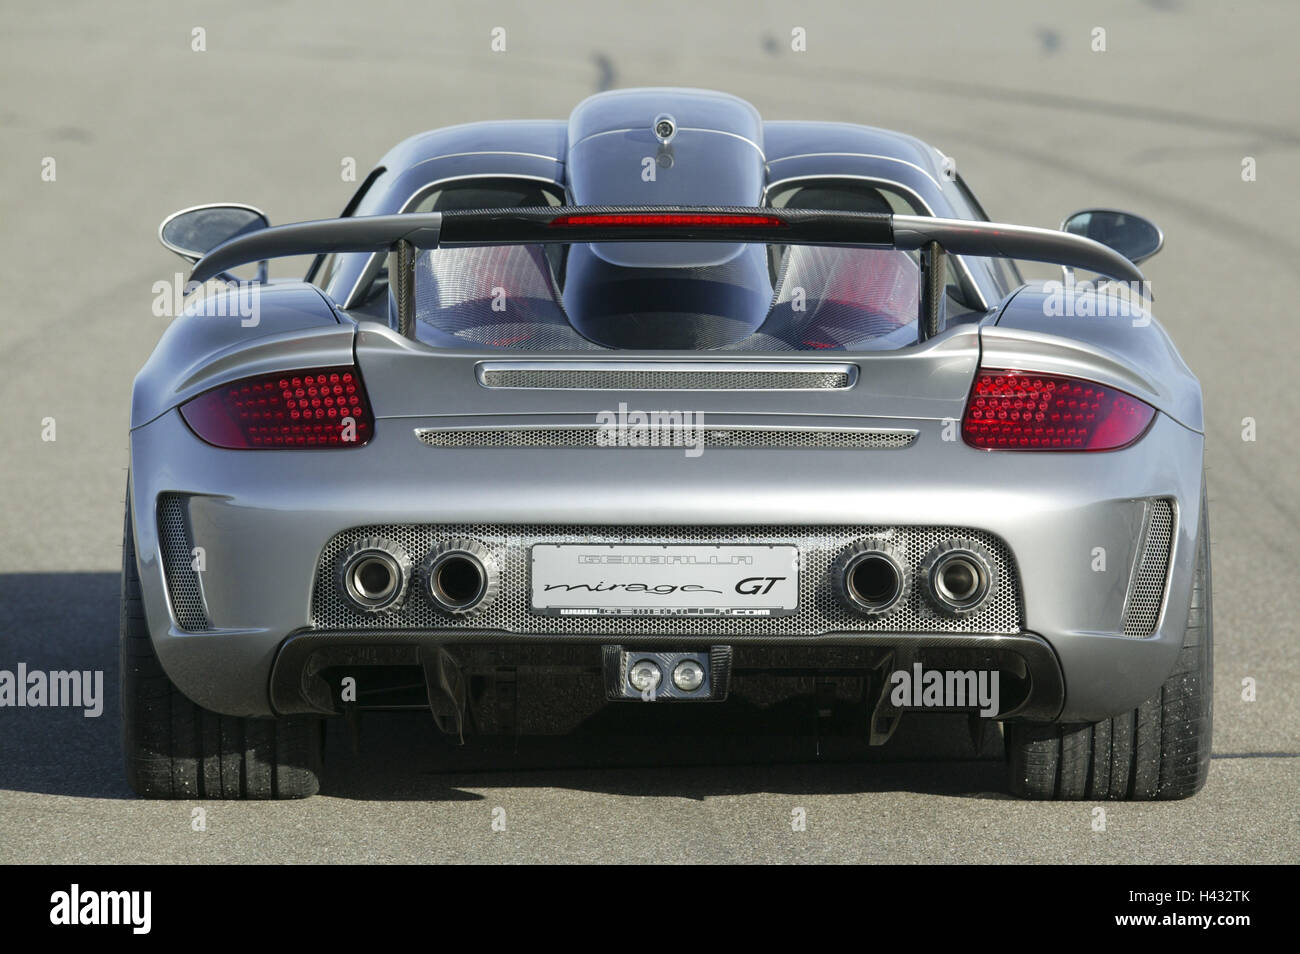 Gemballa Porsche, 'Mirage GT", argento, vista posteriore Foto Stock